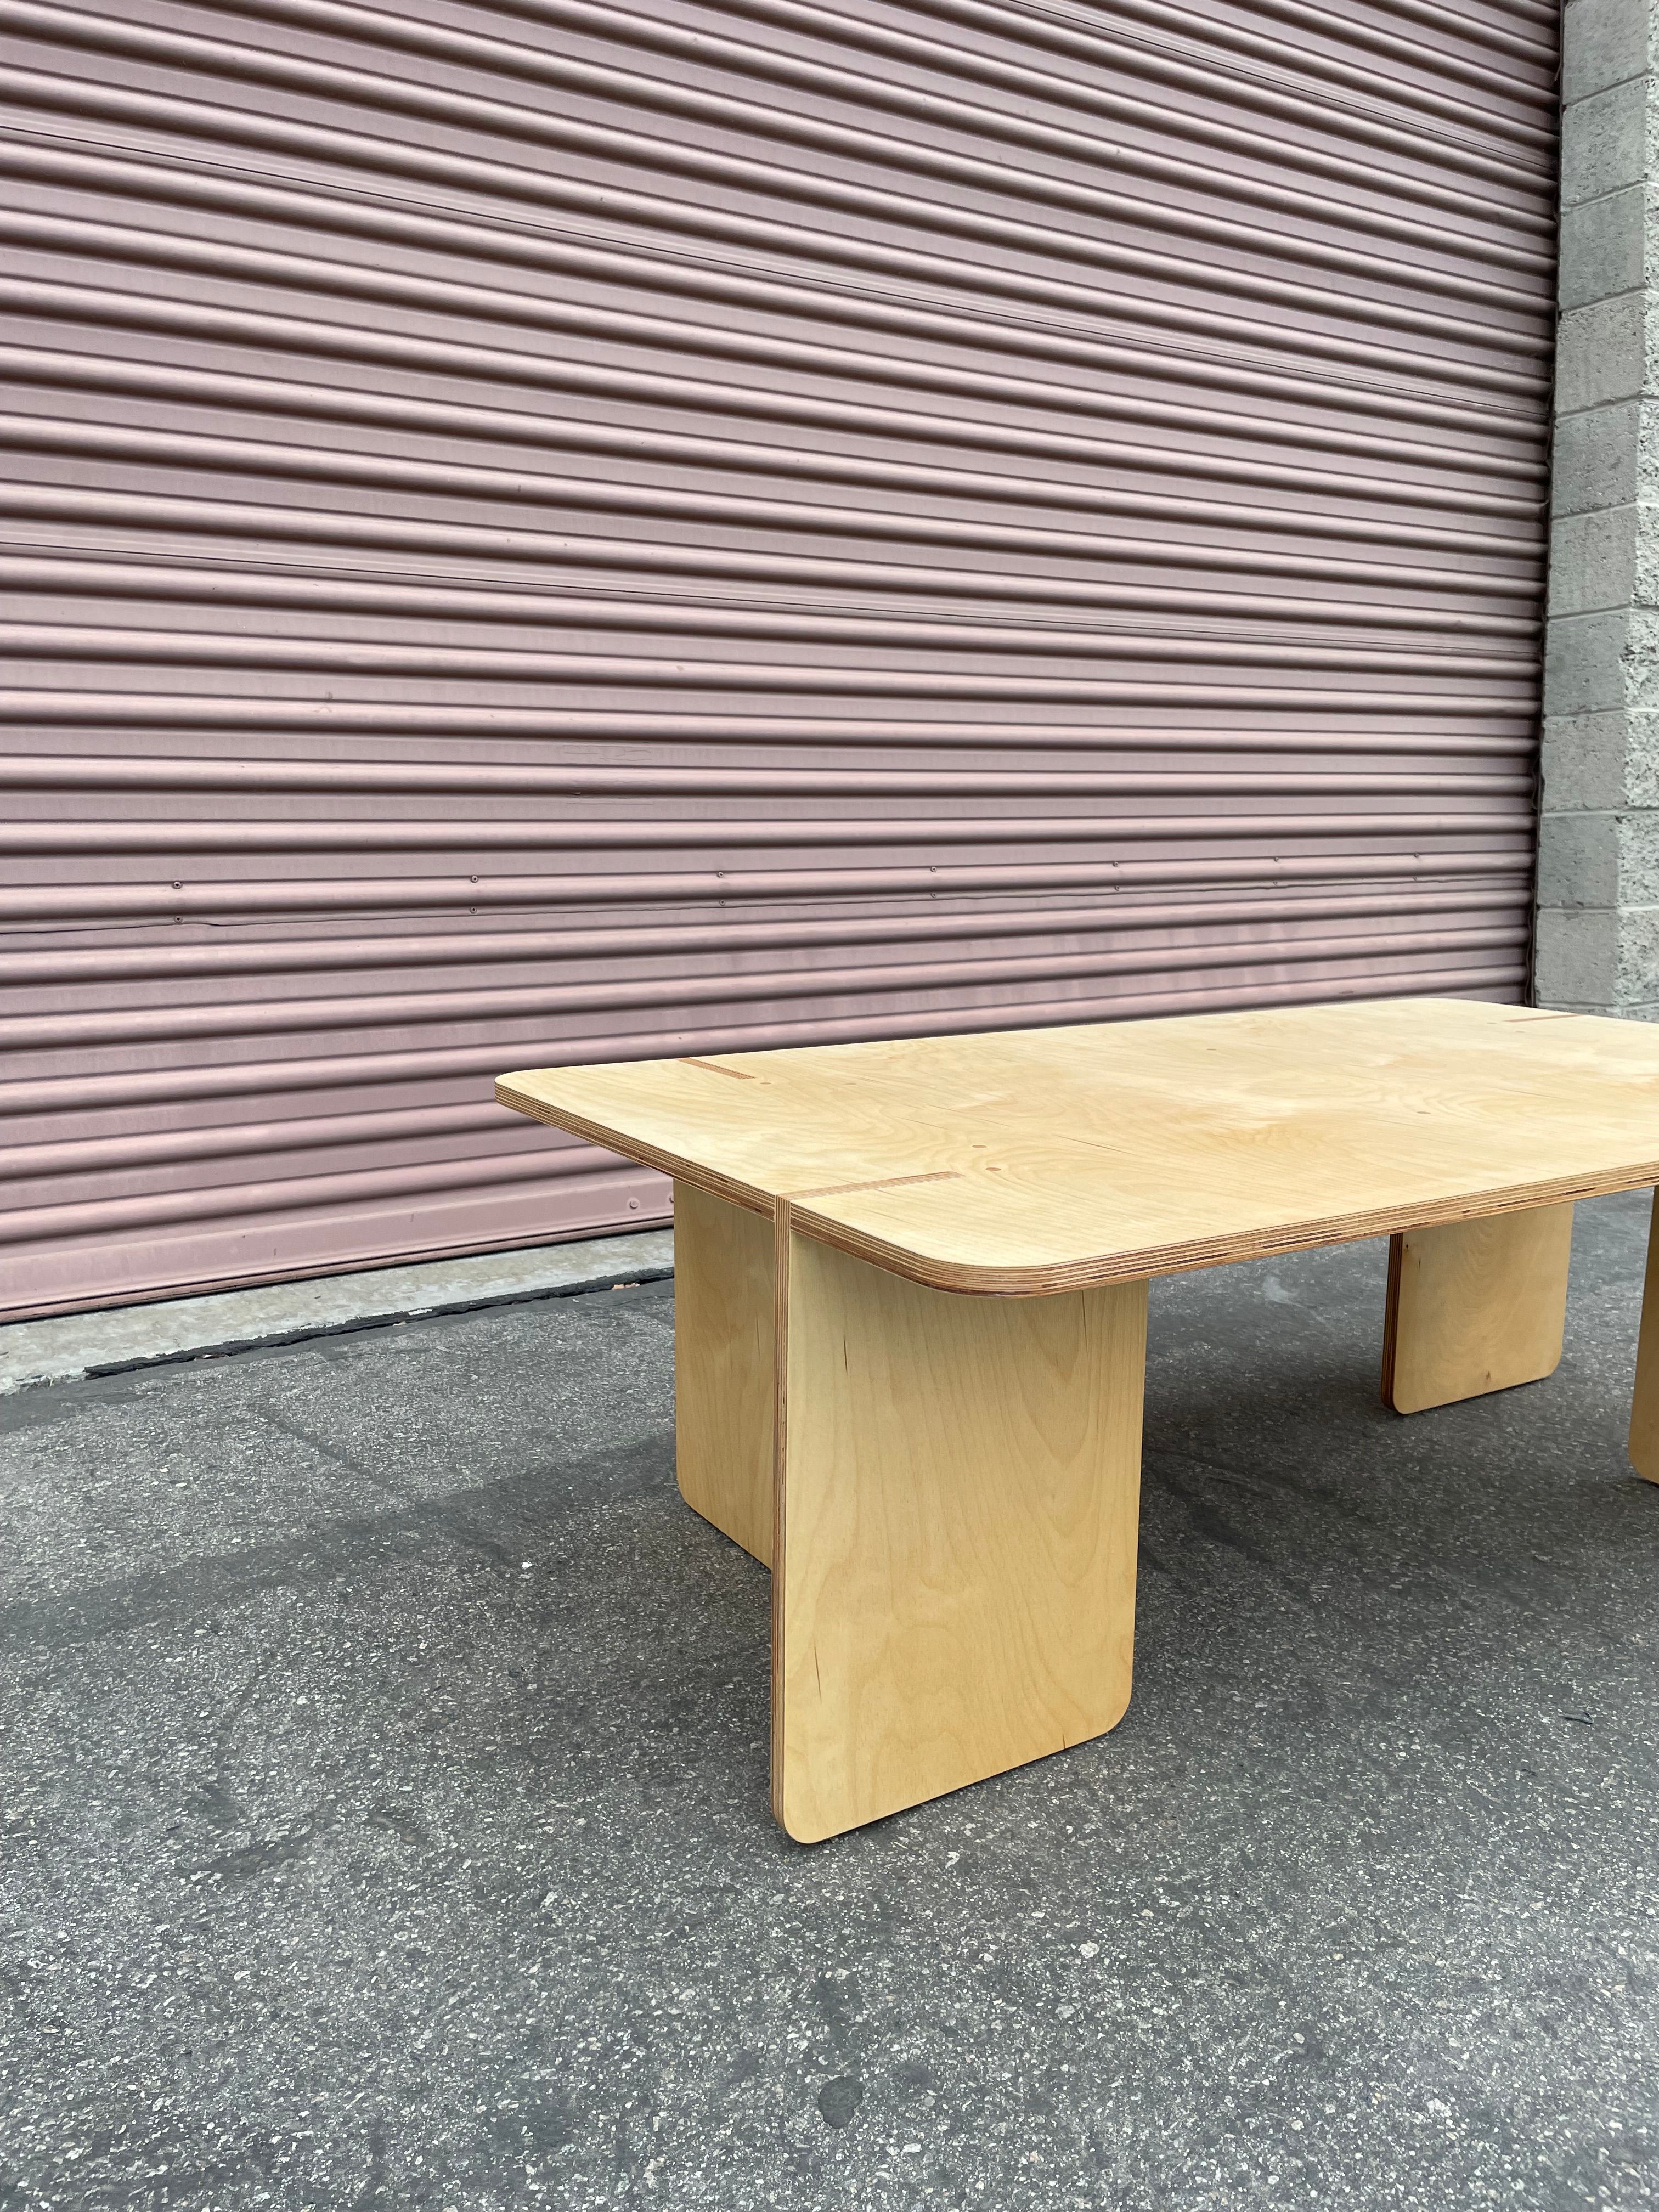  Low Rider Coffee table - Studio Keeta product image 2